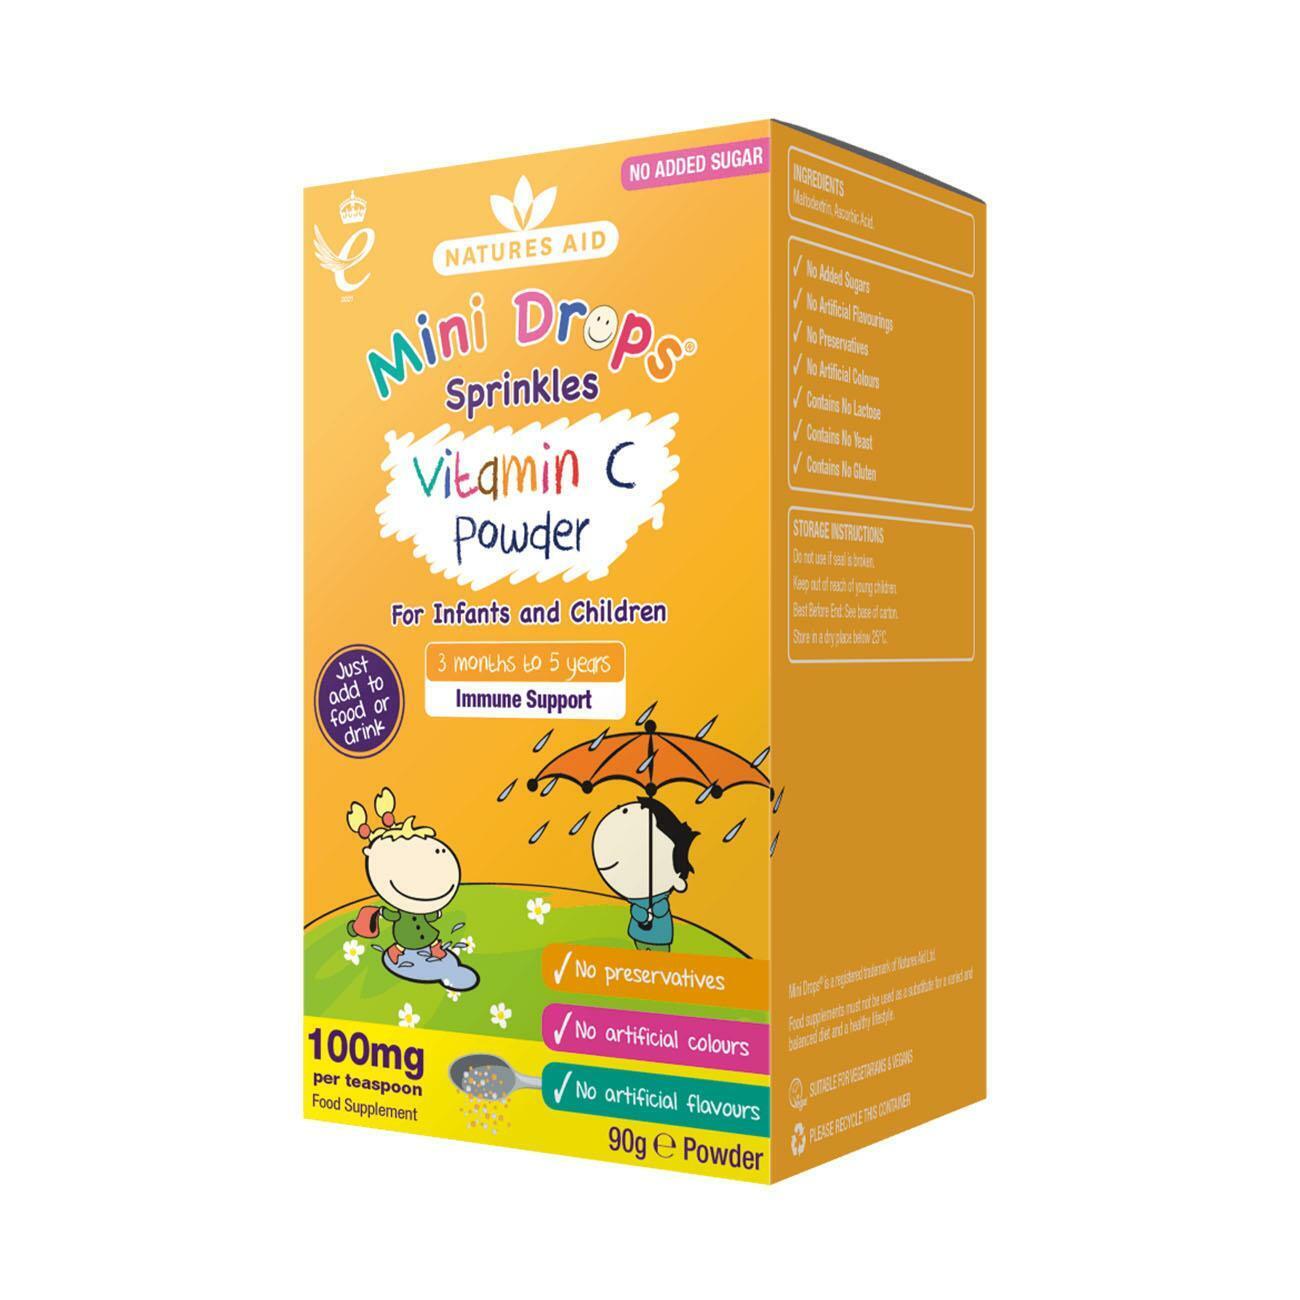 Natures Aid Mini Drops Sprinkles Vitamin C Powder 90g RRP £6.95 CLEARANCE XL £4.99